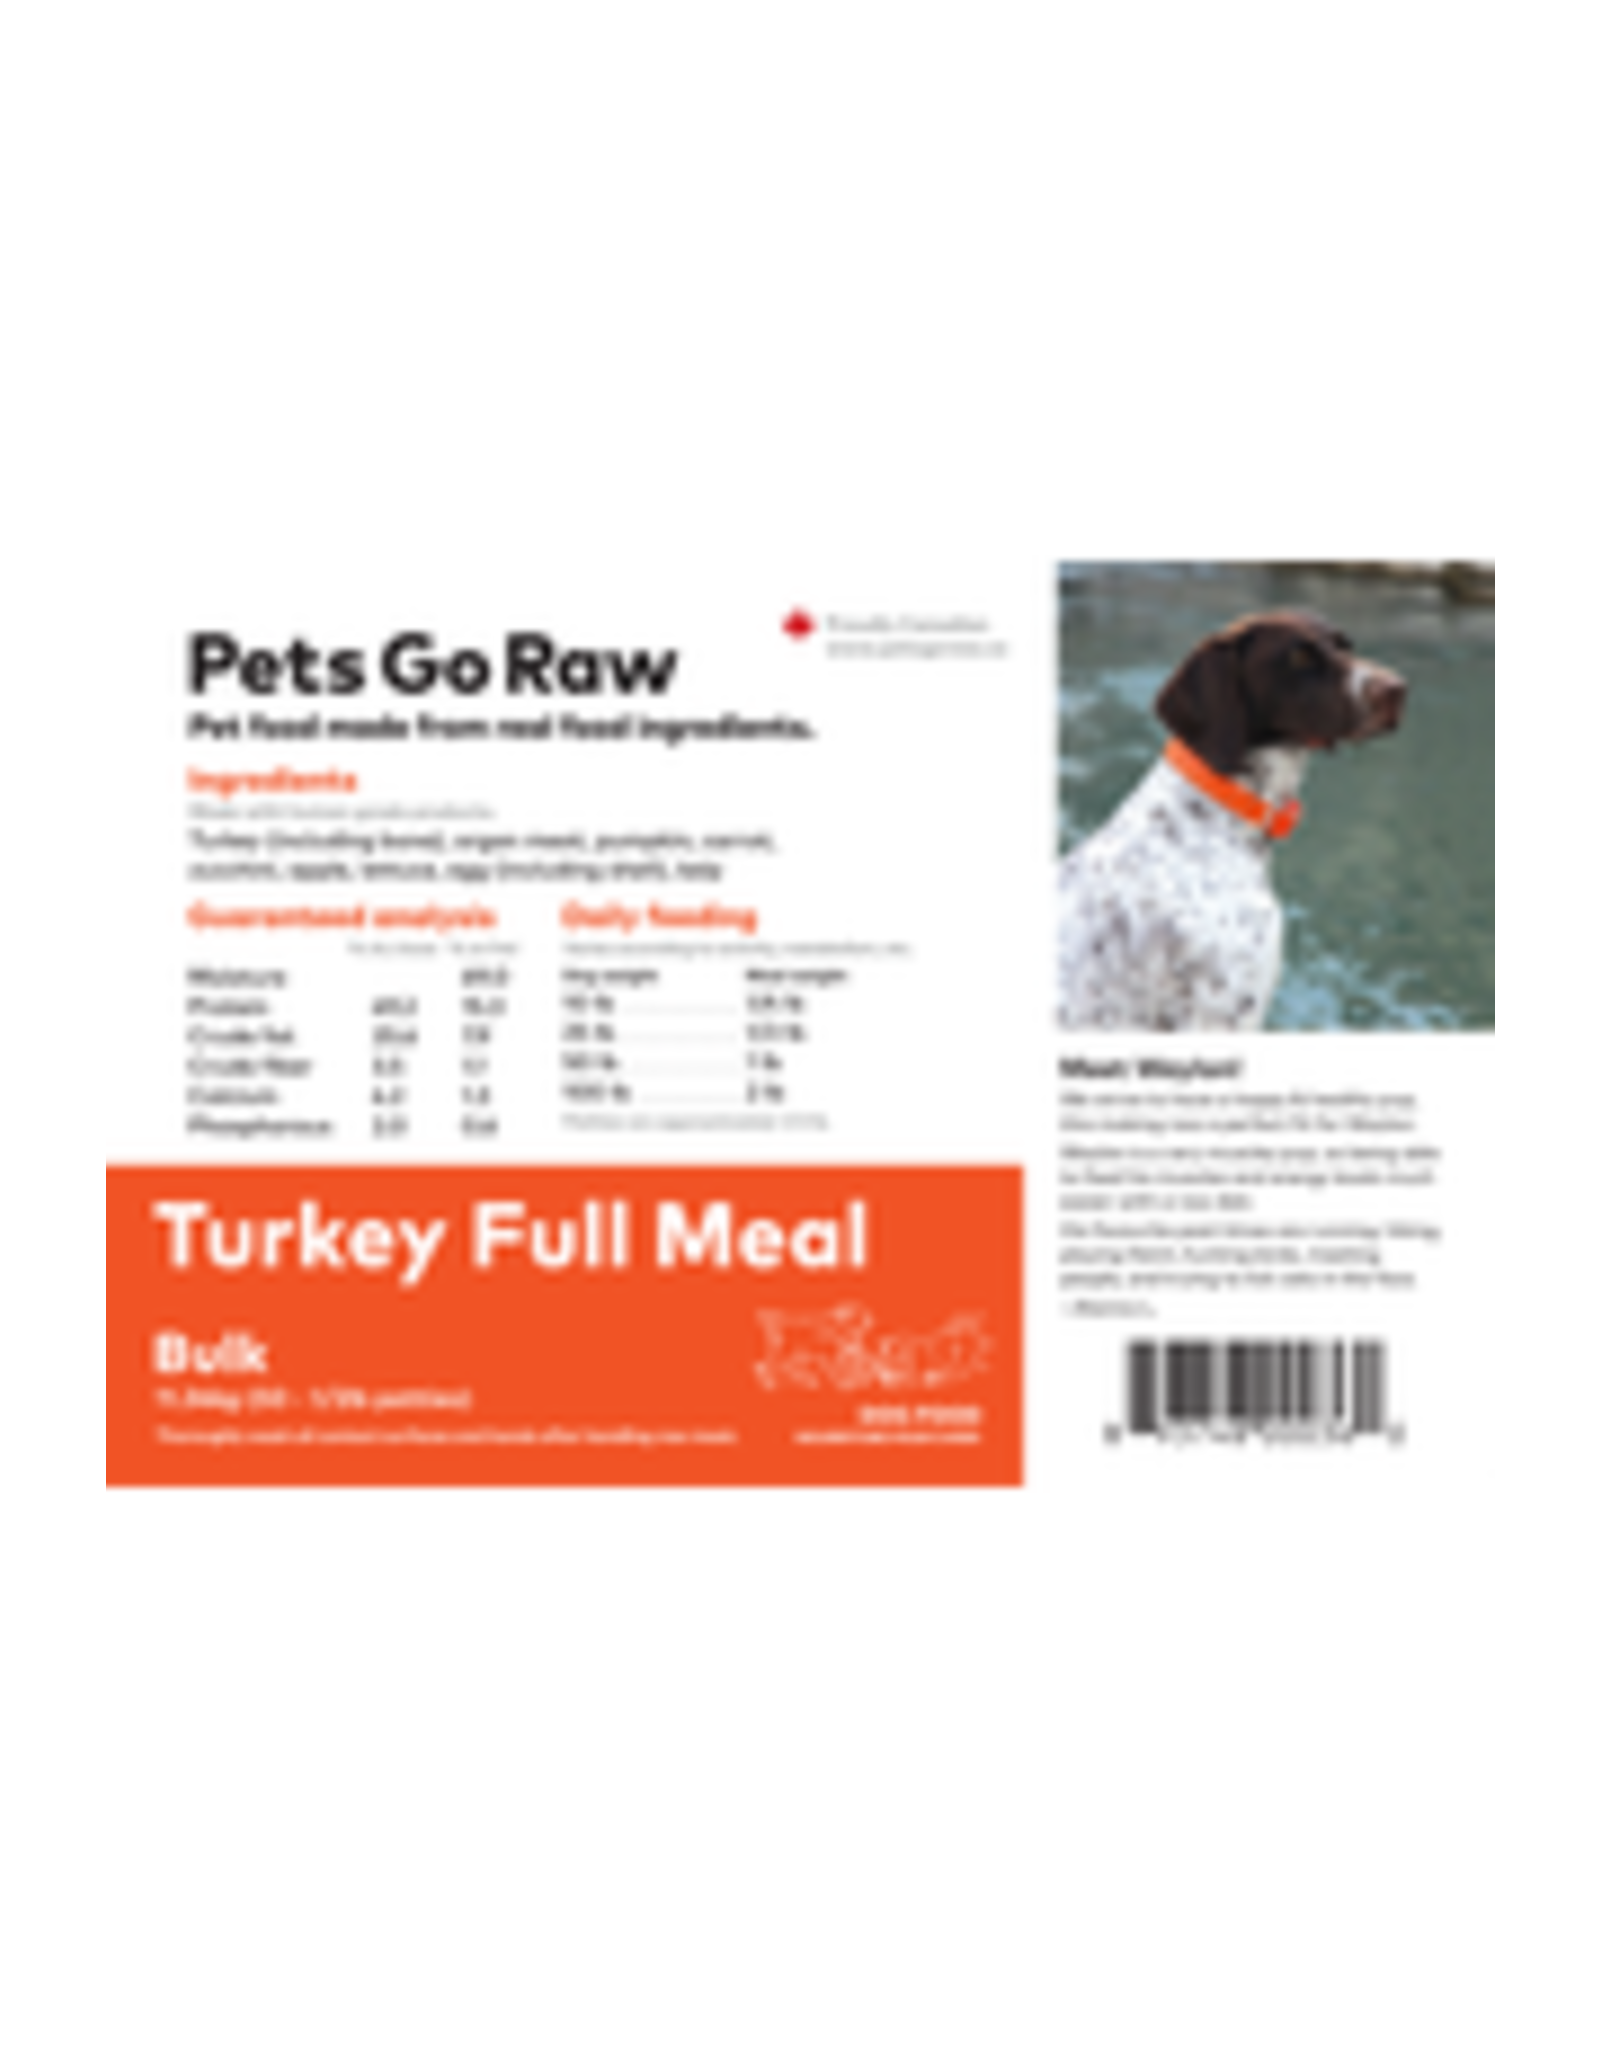 Pets Go Raw - Turkey Full Meal Bulk Box - 1/2lb Portions - 25lbs